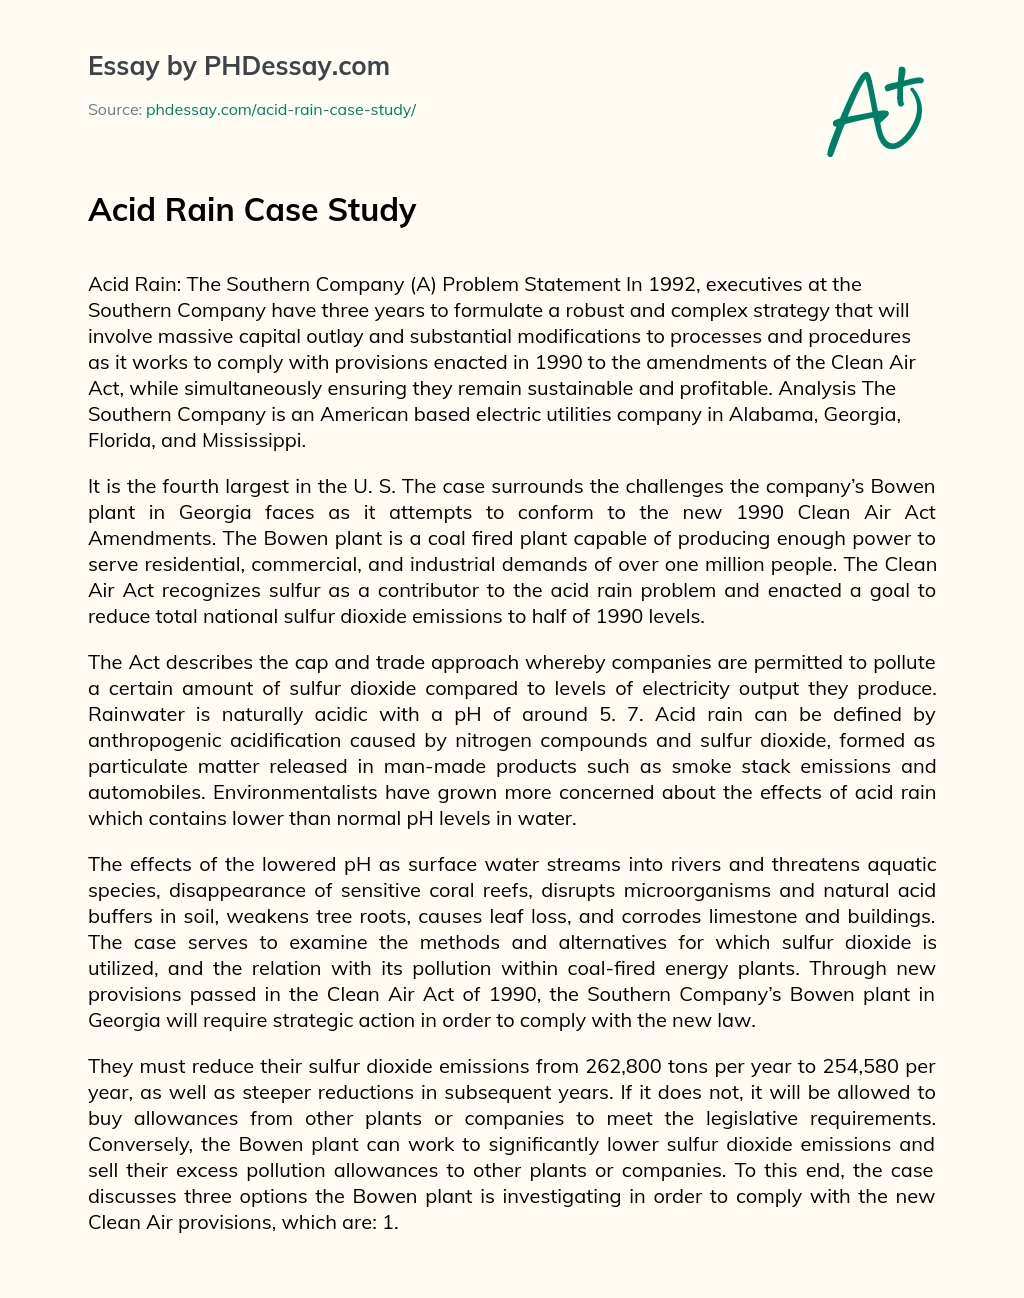 Acid Rain Case Study essay